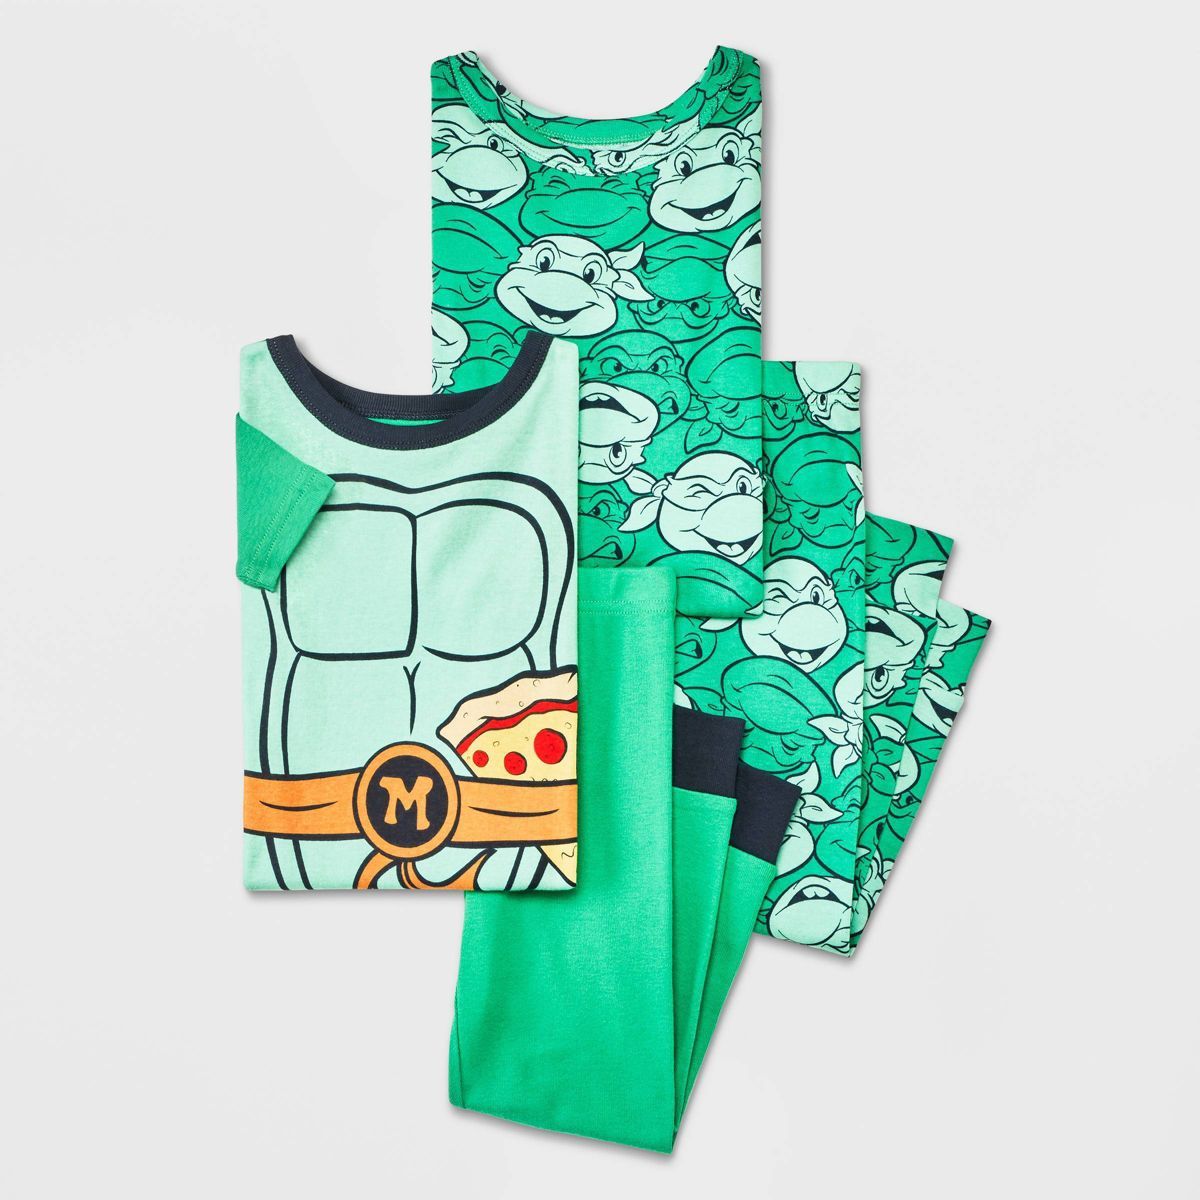 Toddler Boys' 4pc Teenage Mutant Ninja Turtles Snug Fit Pajama Set - Green | Target